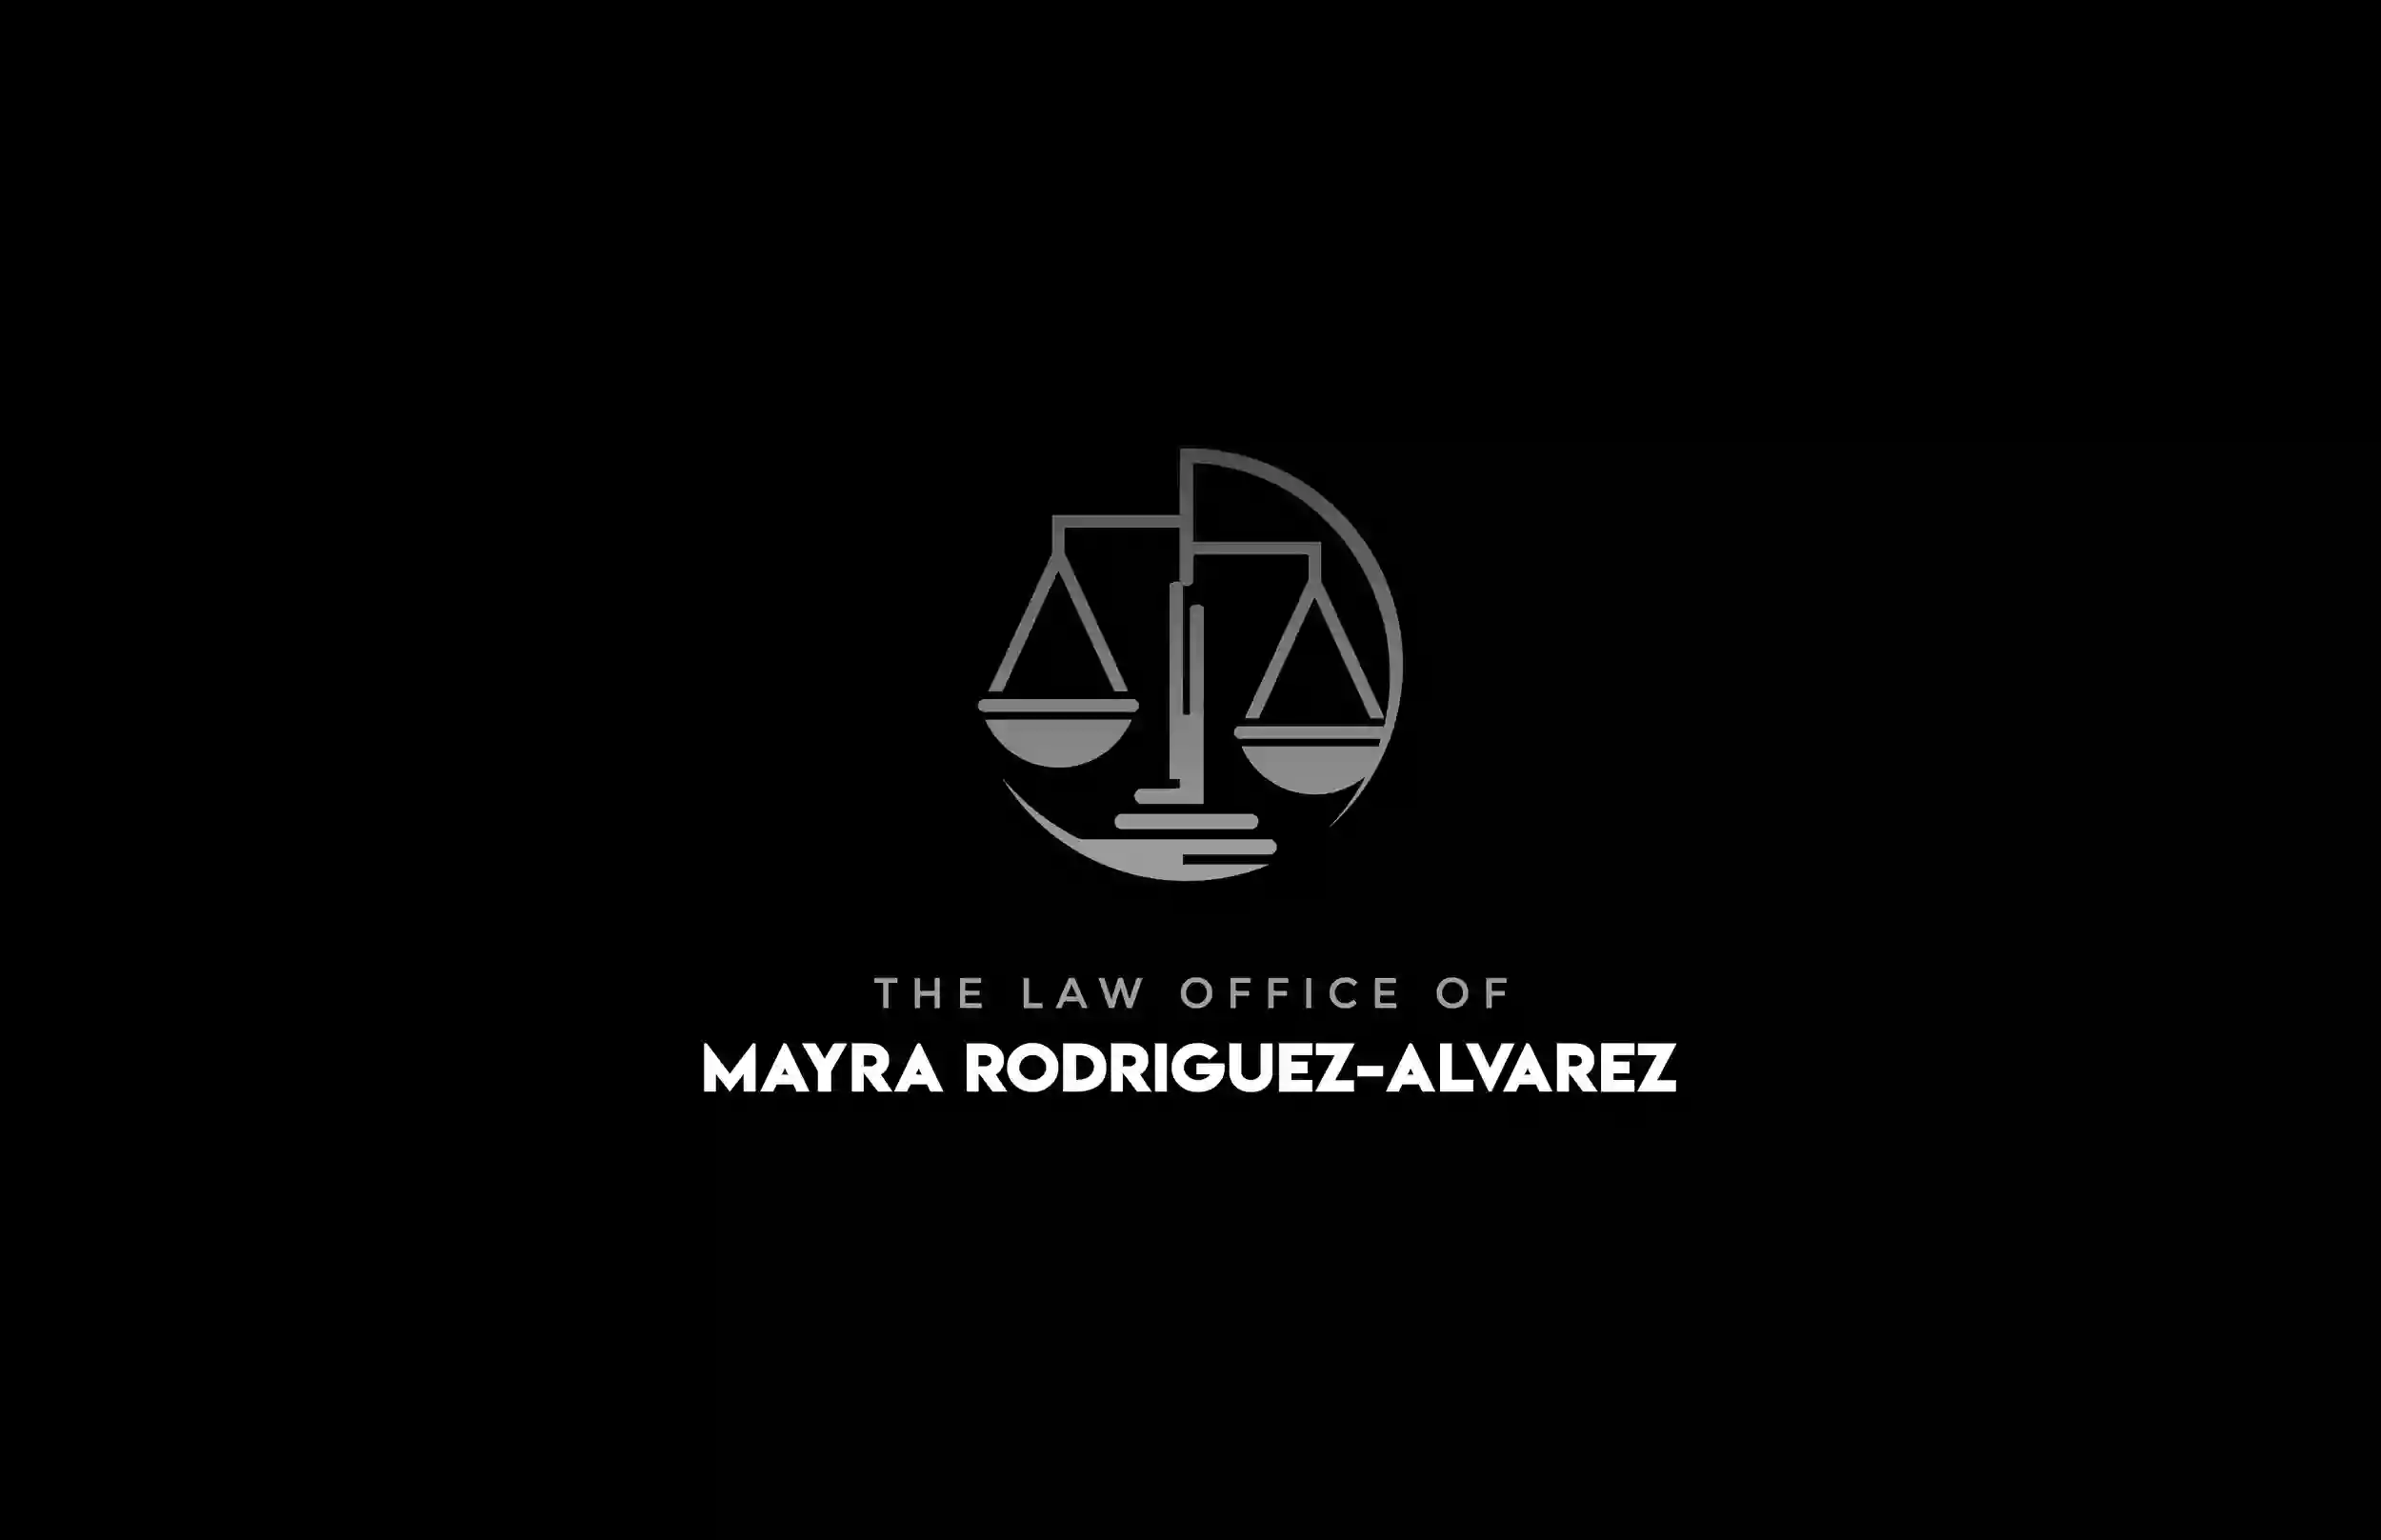 The Law Office of Mayra Rodriguez-Alvarez